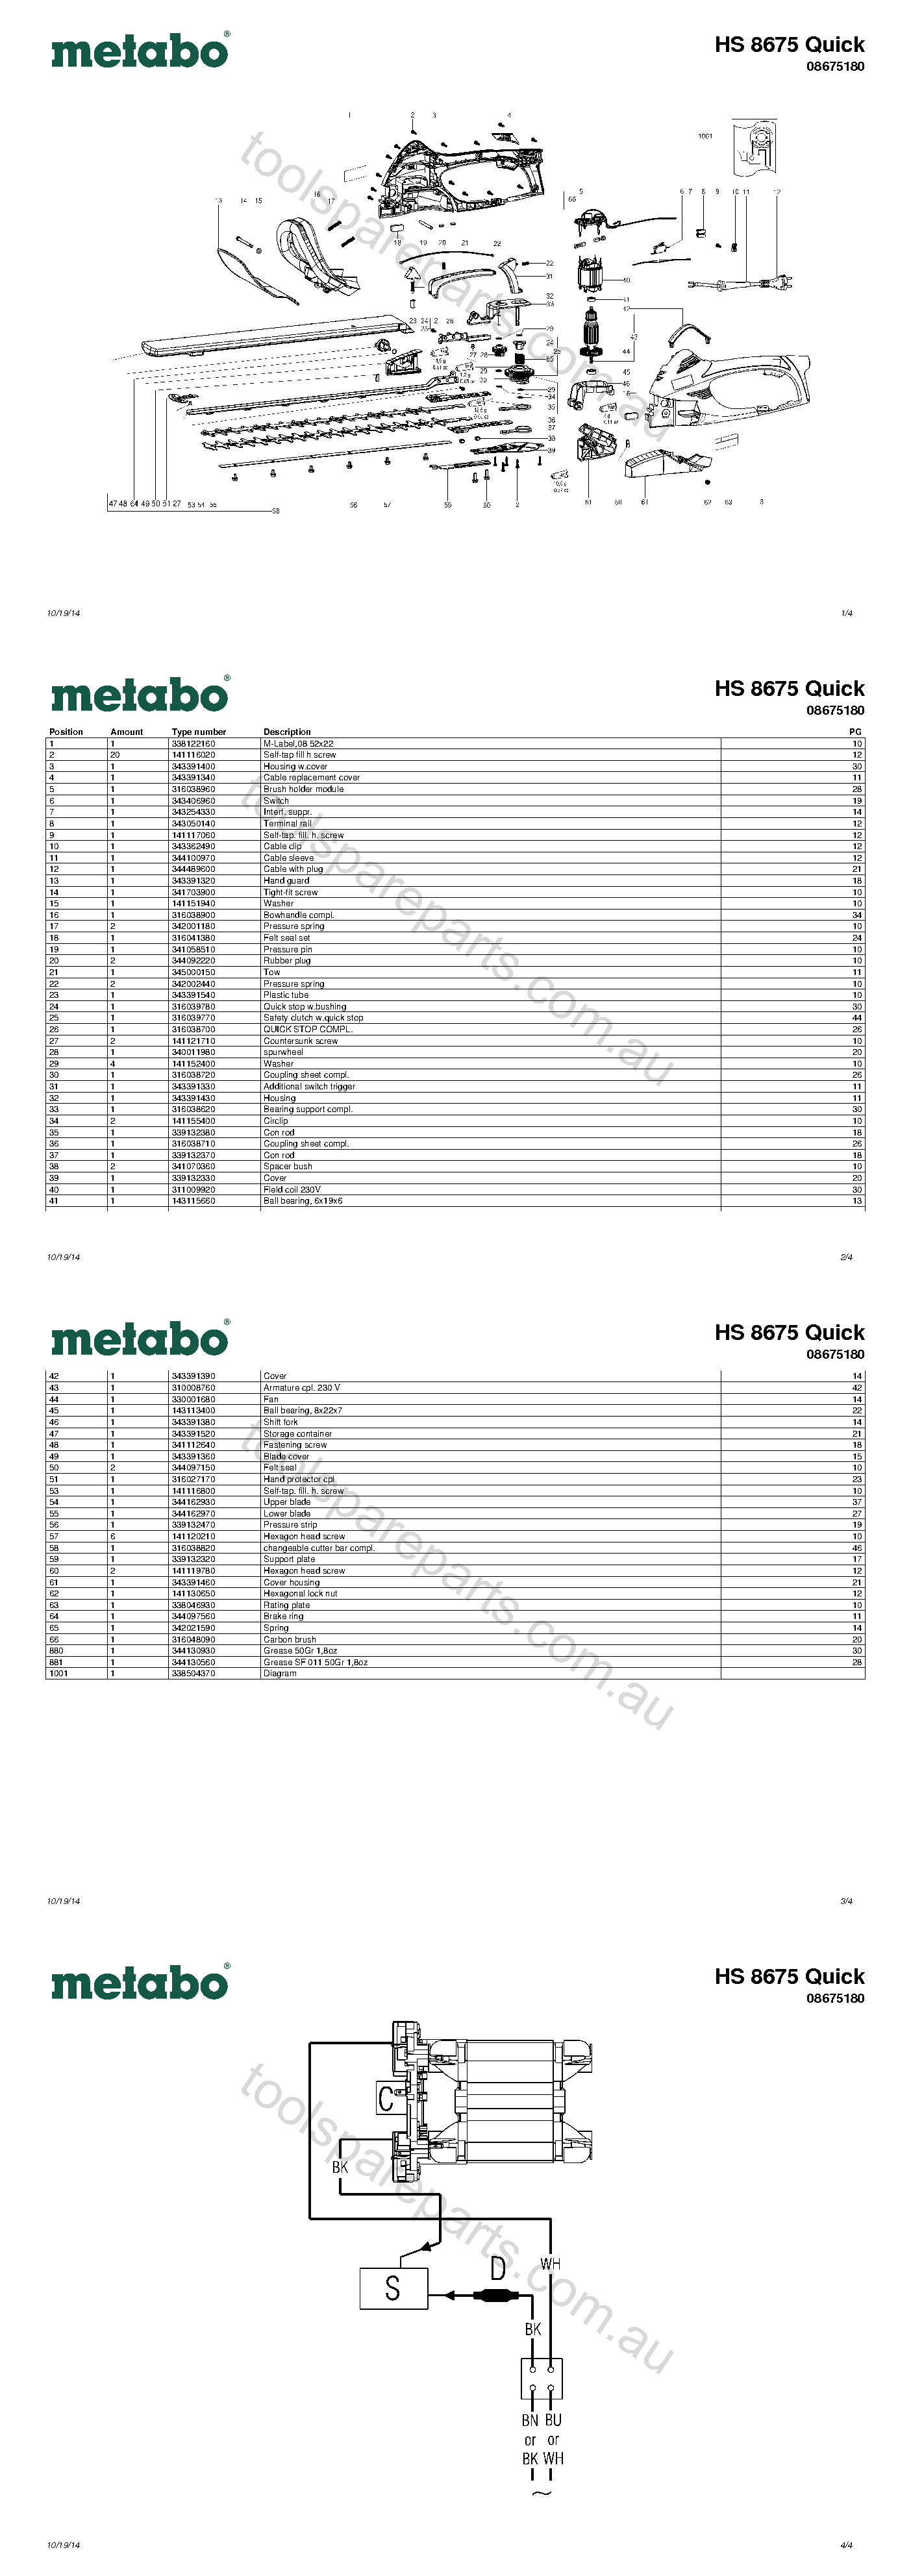 Metabo HS 8675 Quick 08675180  Diagram 1